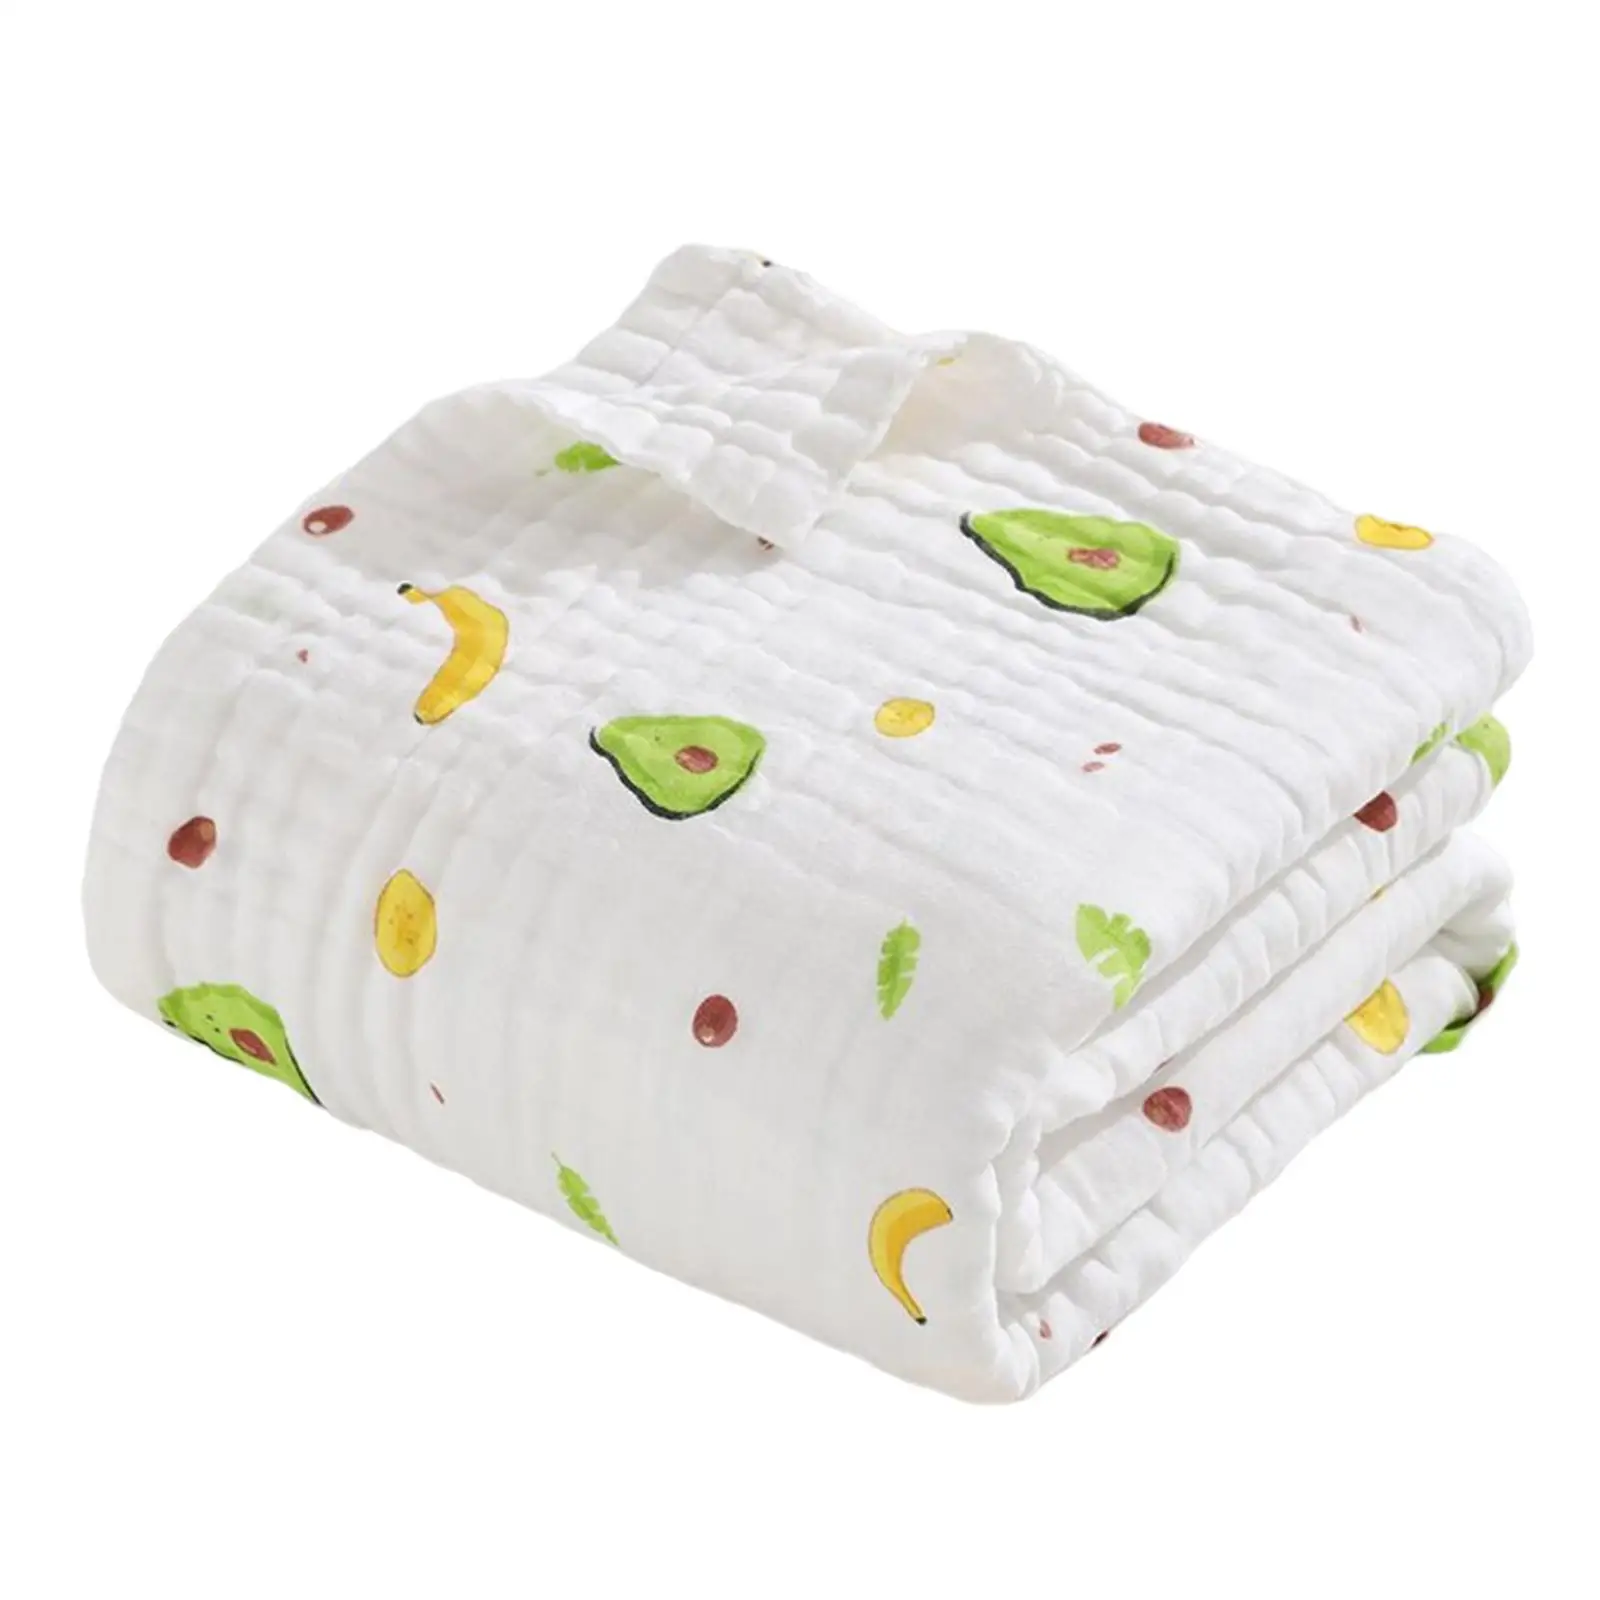 bath Towel, Blanket Wrap Gauze cotton Breathable for Kids Child Infant Blanket